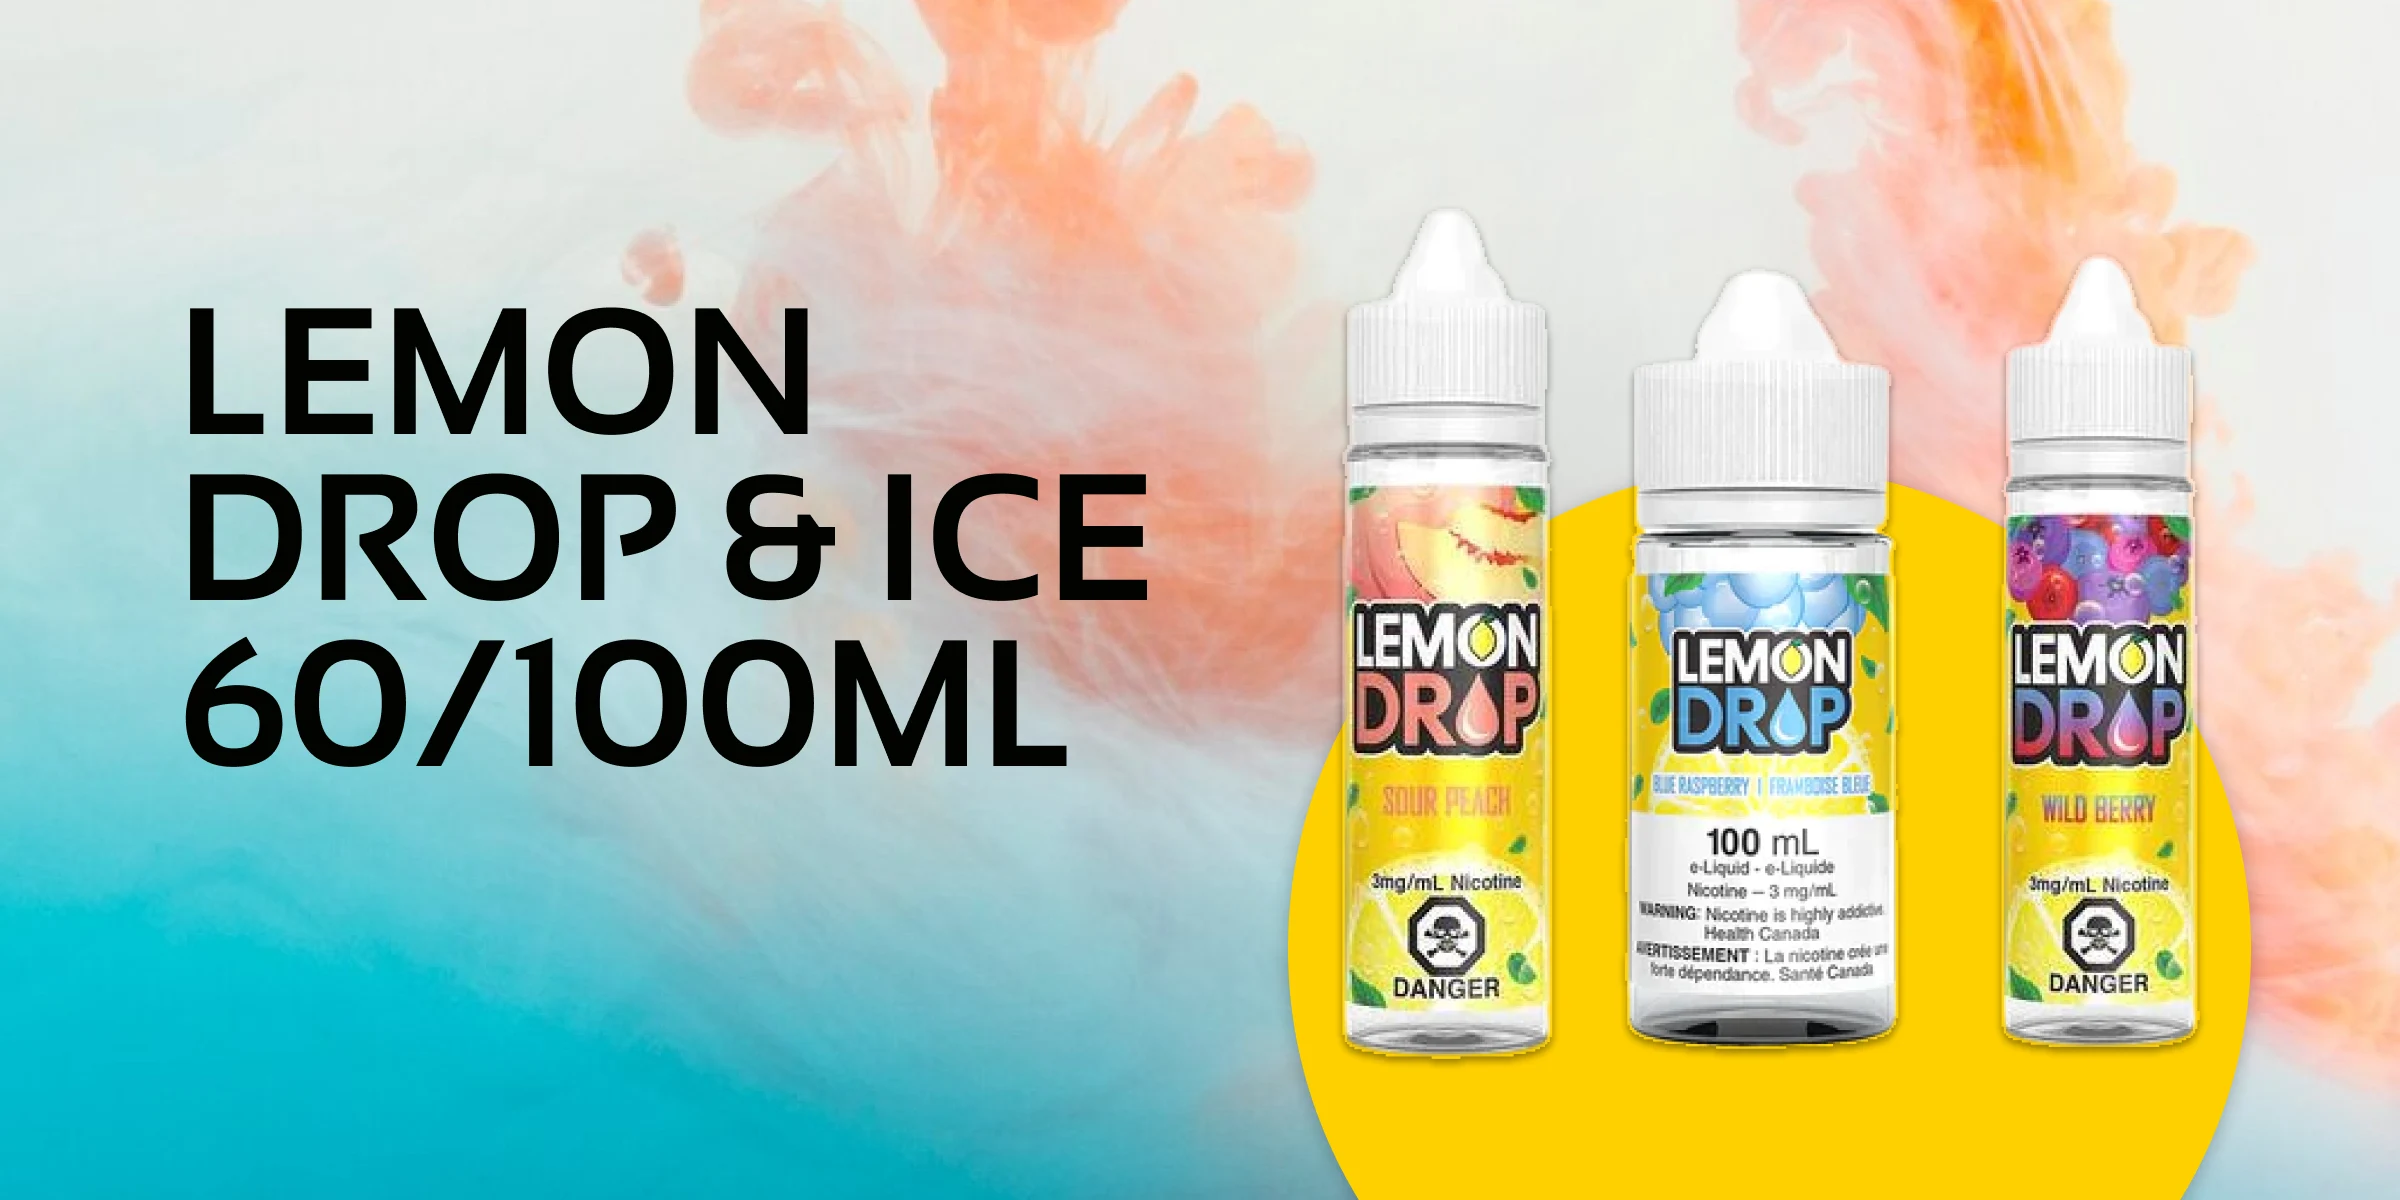 LEMON DROP & ICE 60/100ML